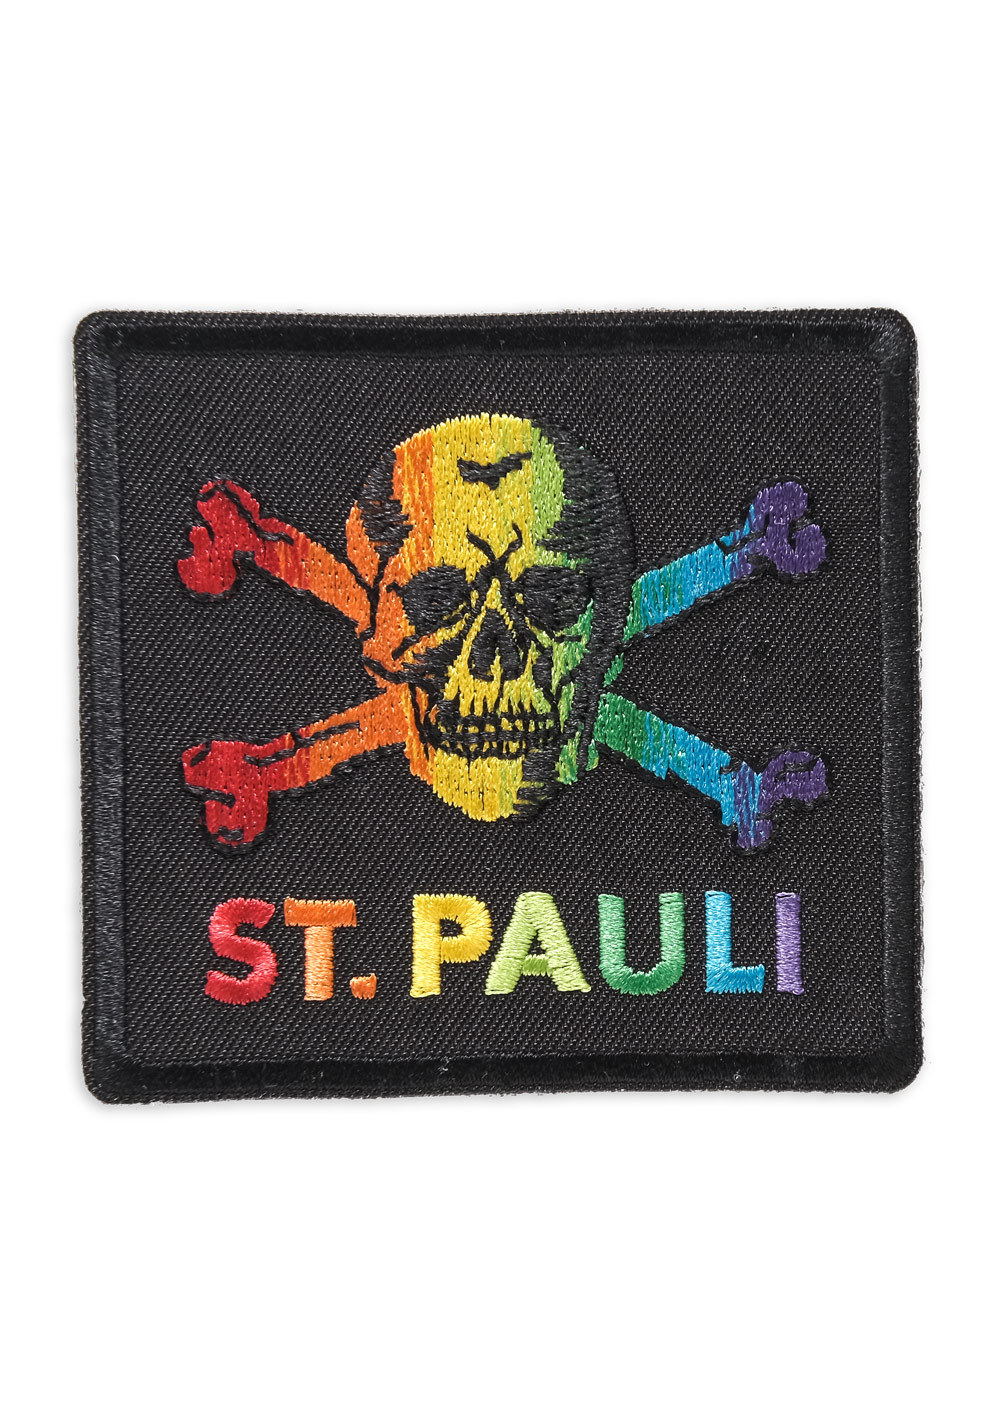 Patch - Skull and Crossbones Rainbow 